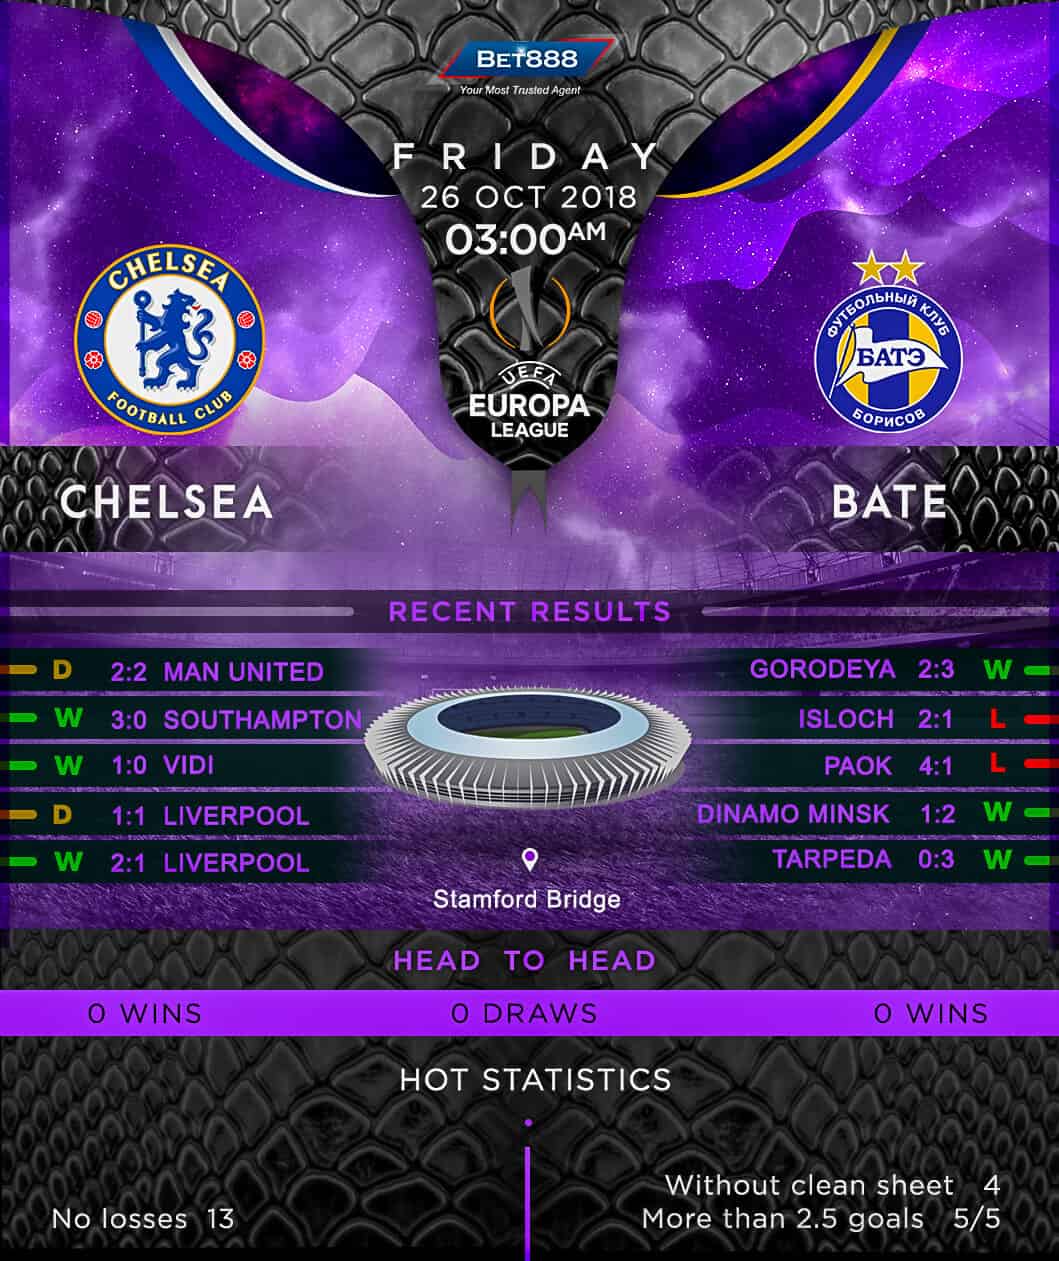 Chelsea vs BATE Borisov 26/10/18